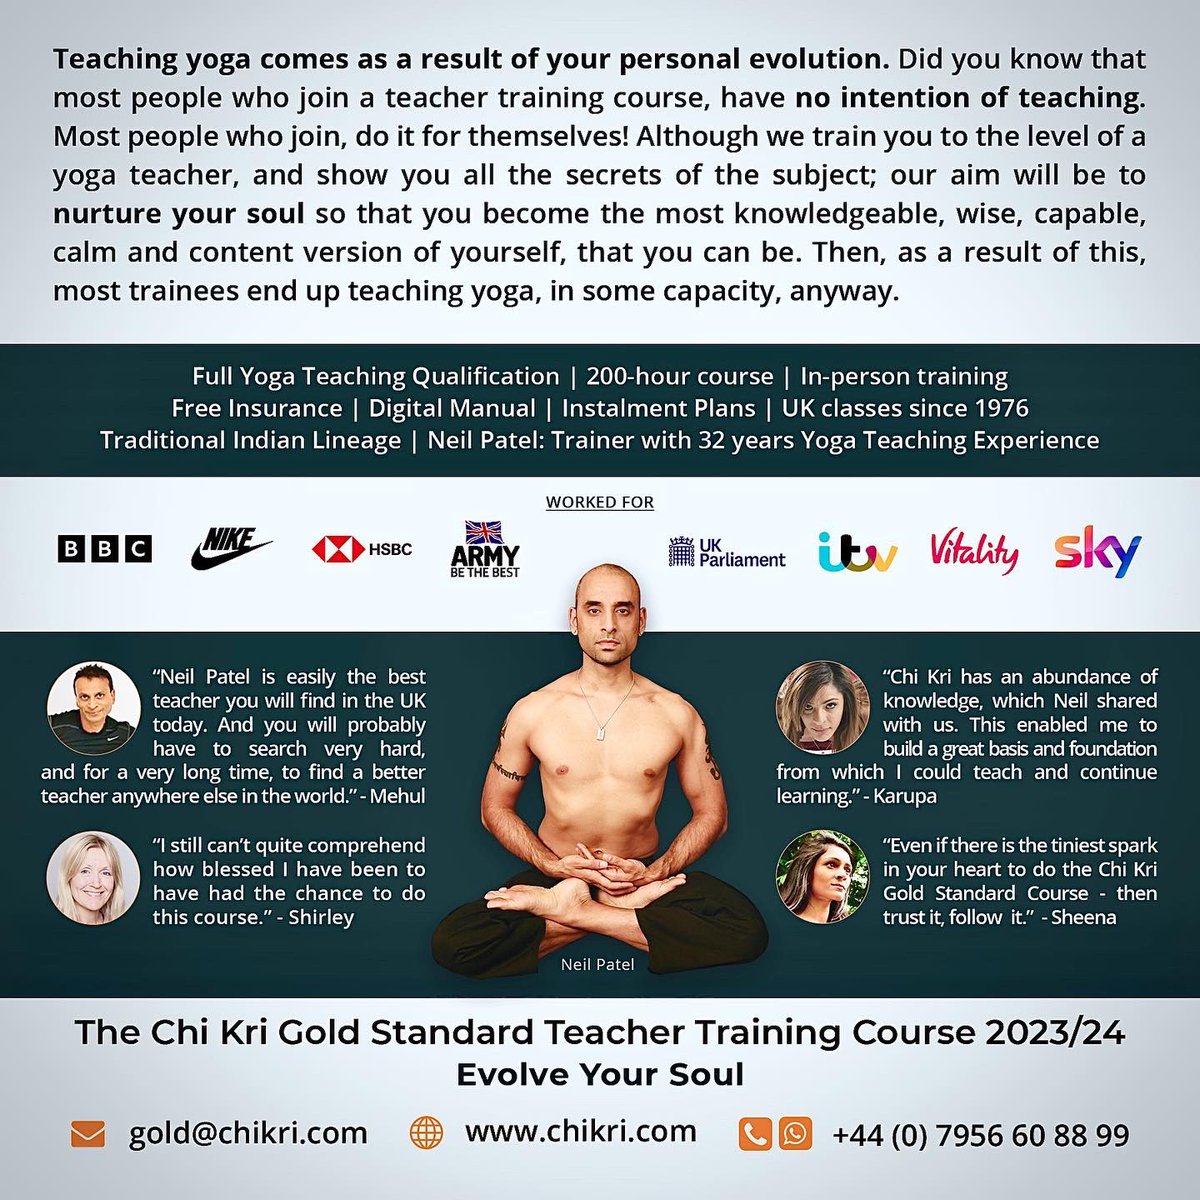 Yoga Teacher Training starts 16th April.

Spiritual Development + Qualification.

#harrow #yogalondon #yogateachertraining